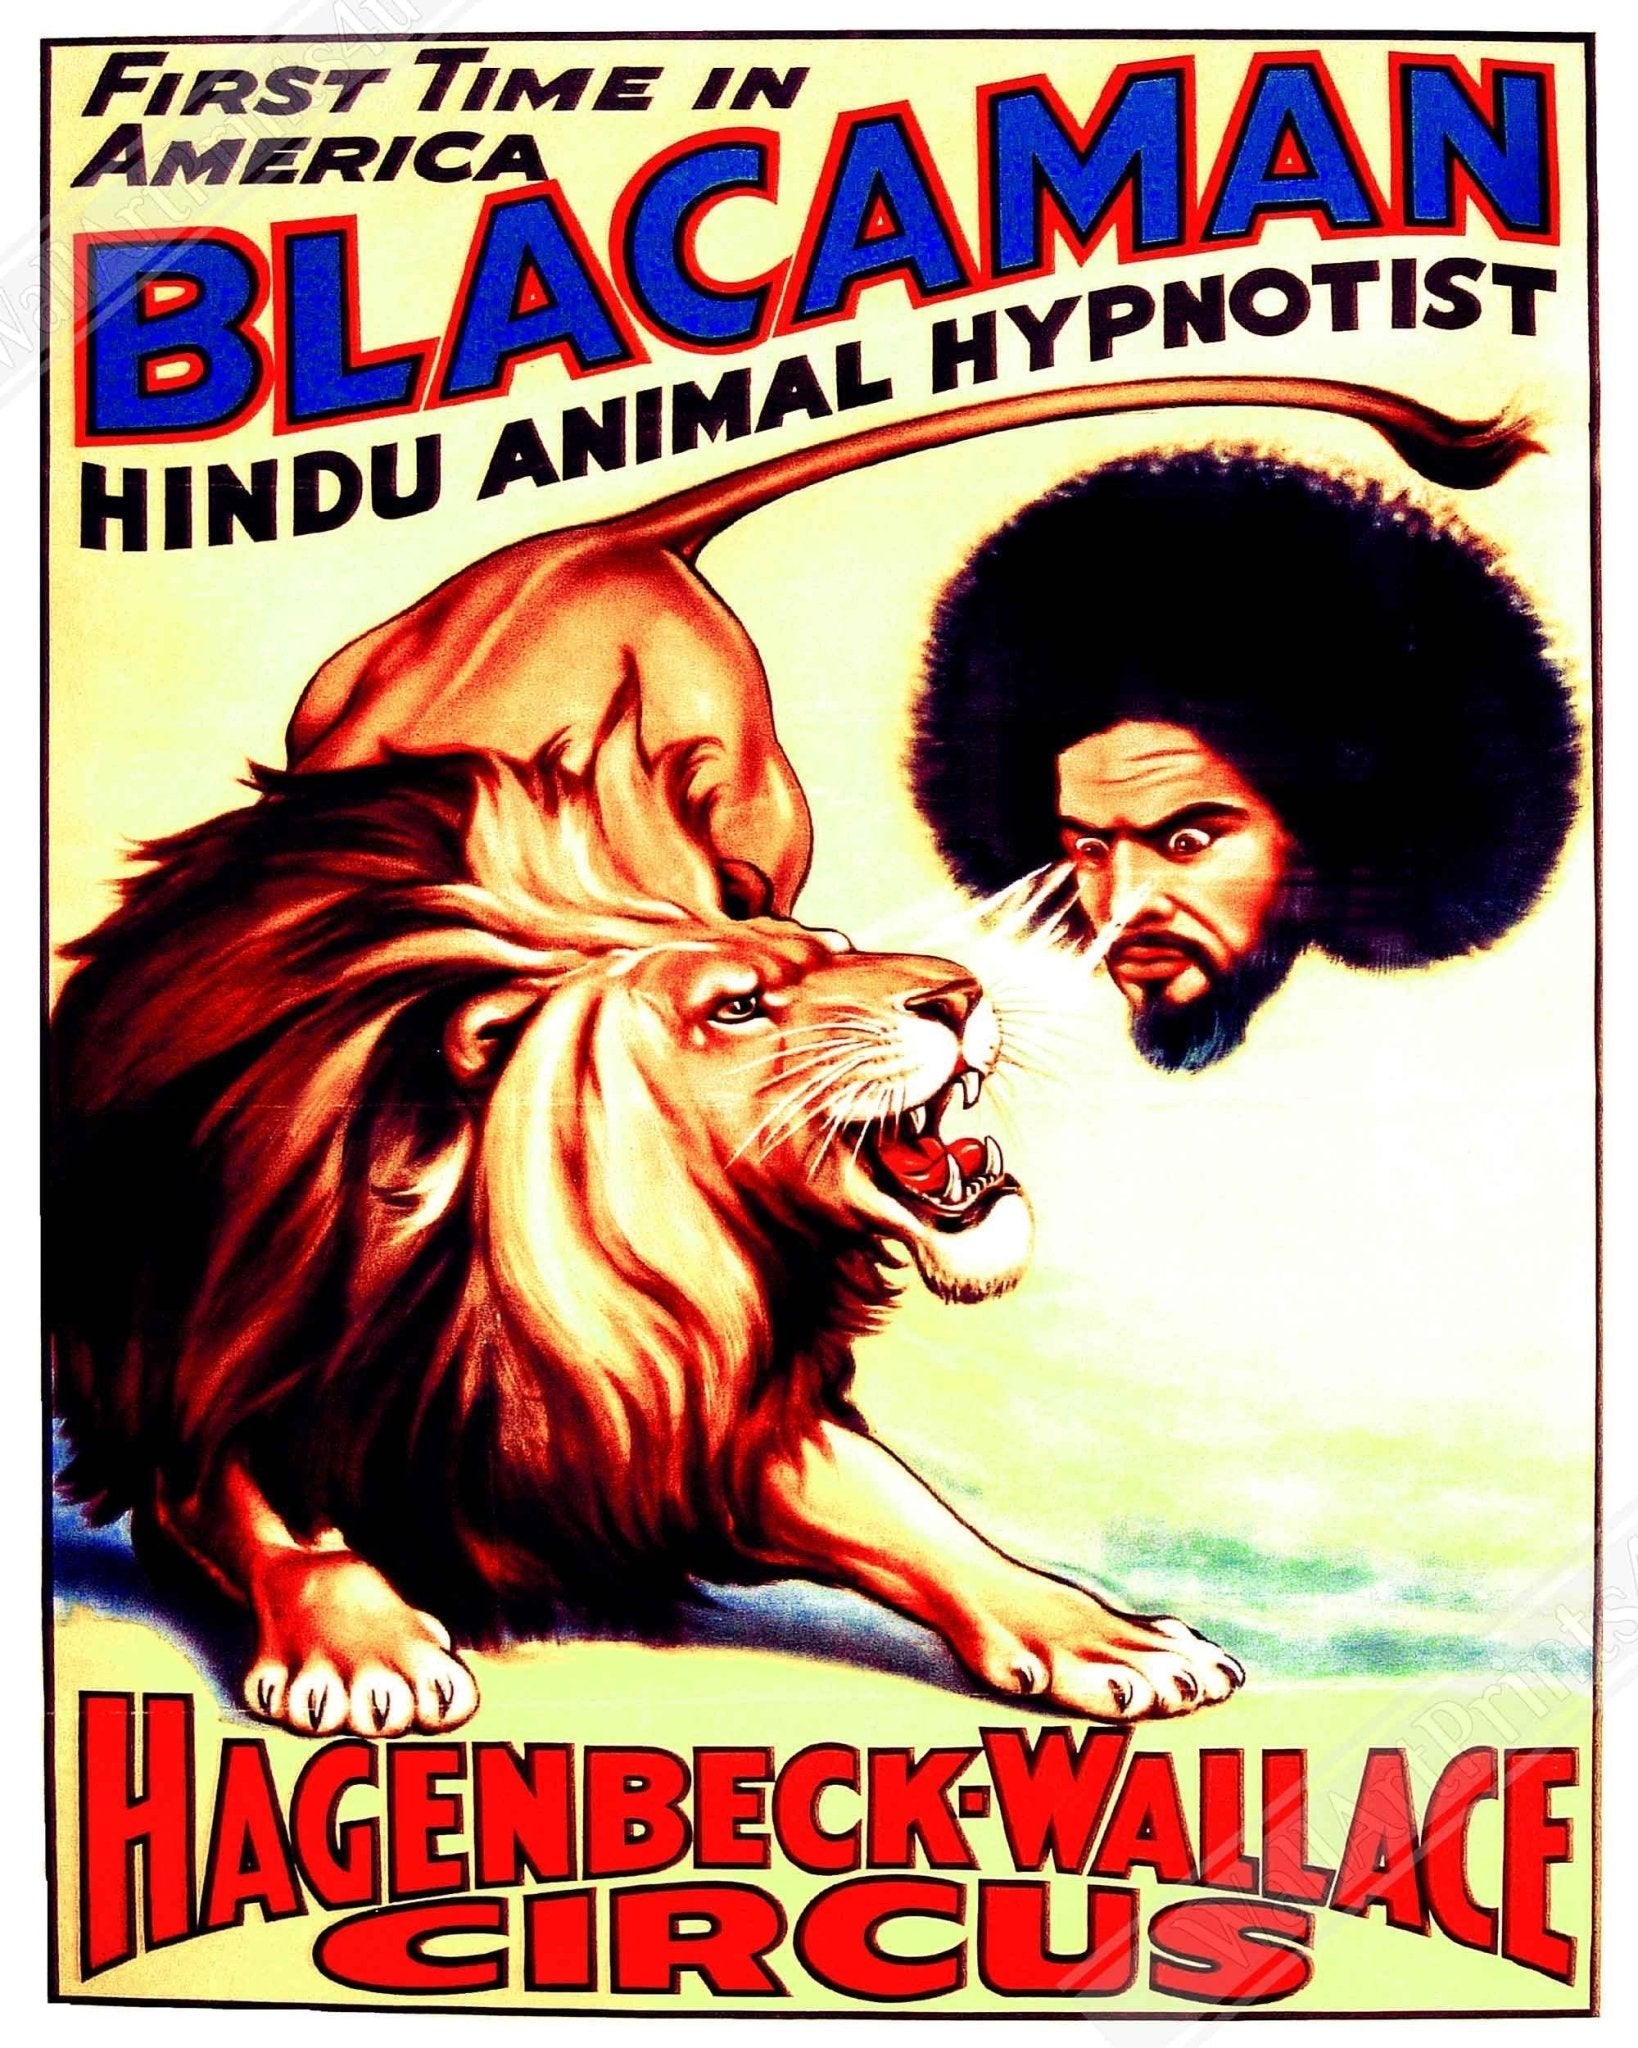 Vintage Circus Canvas, Hindu Animal Hypnotist, Blacaman Indian Fakir, Circa 1928, Old Circus Canvas. - WallArtPrints4U